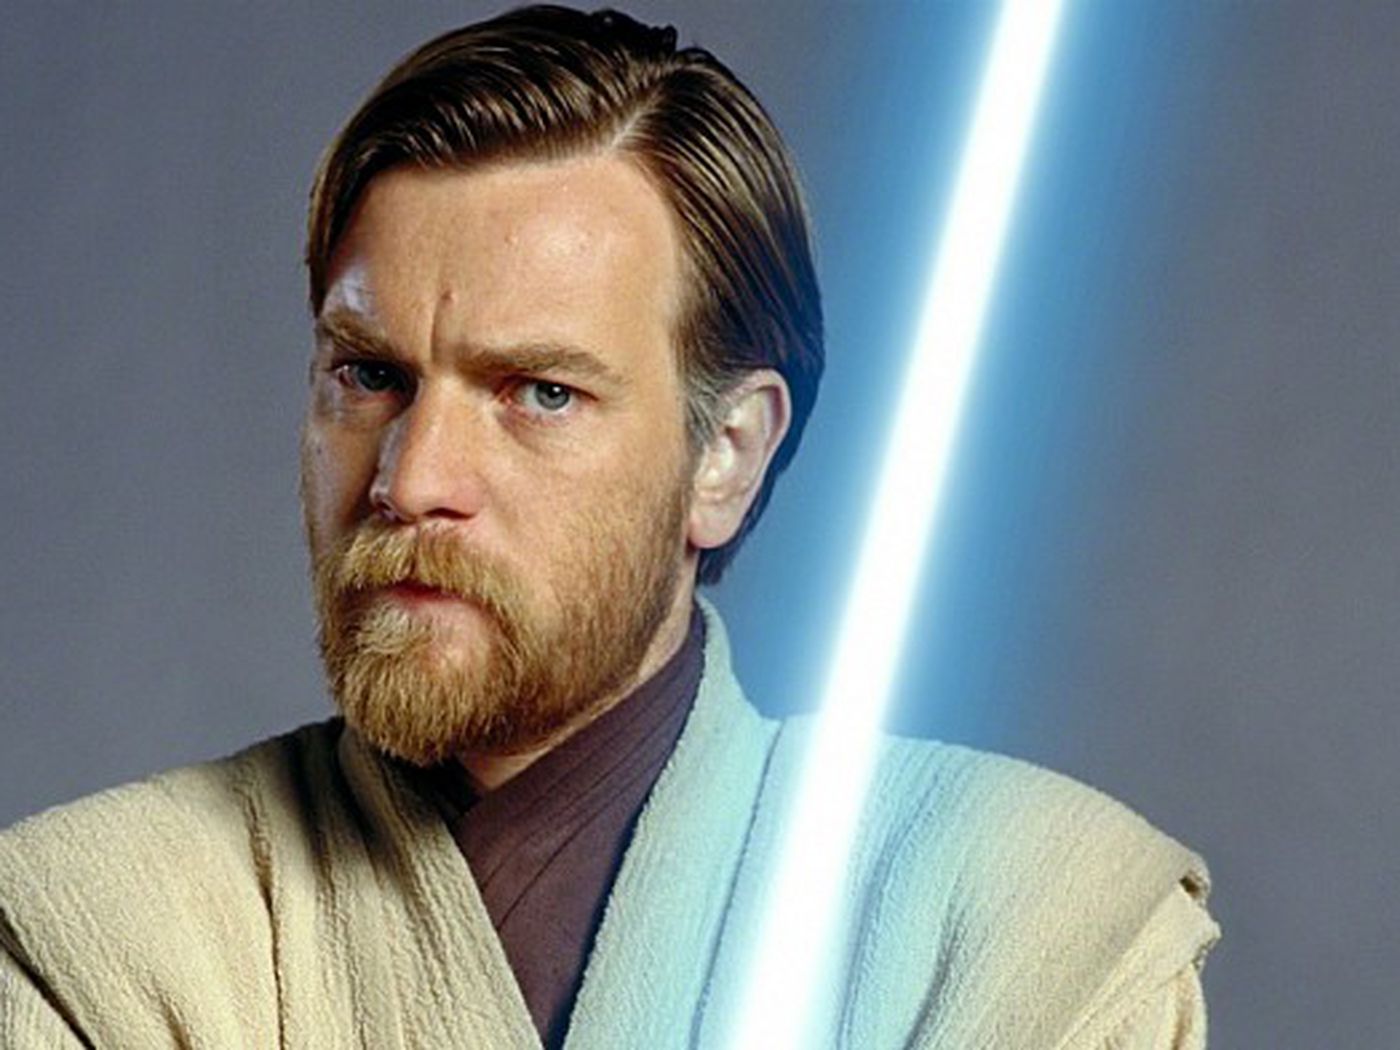 Disney+ Confirms Its Obi Wan Kenobi Series Will Begin Shooting In 2020